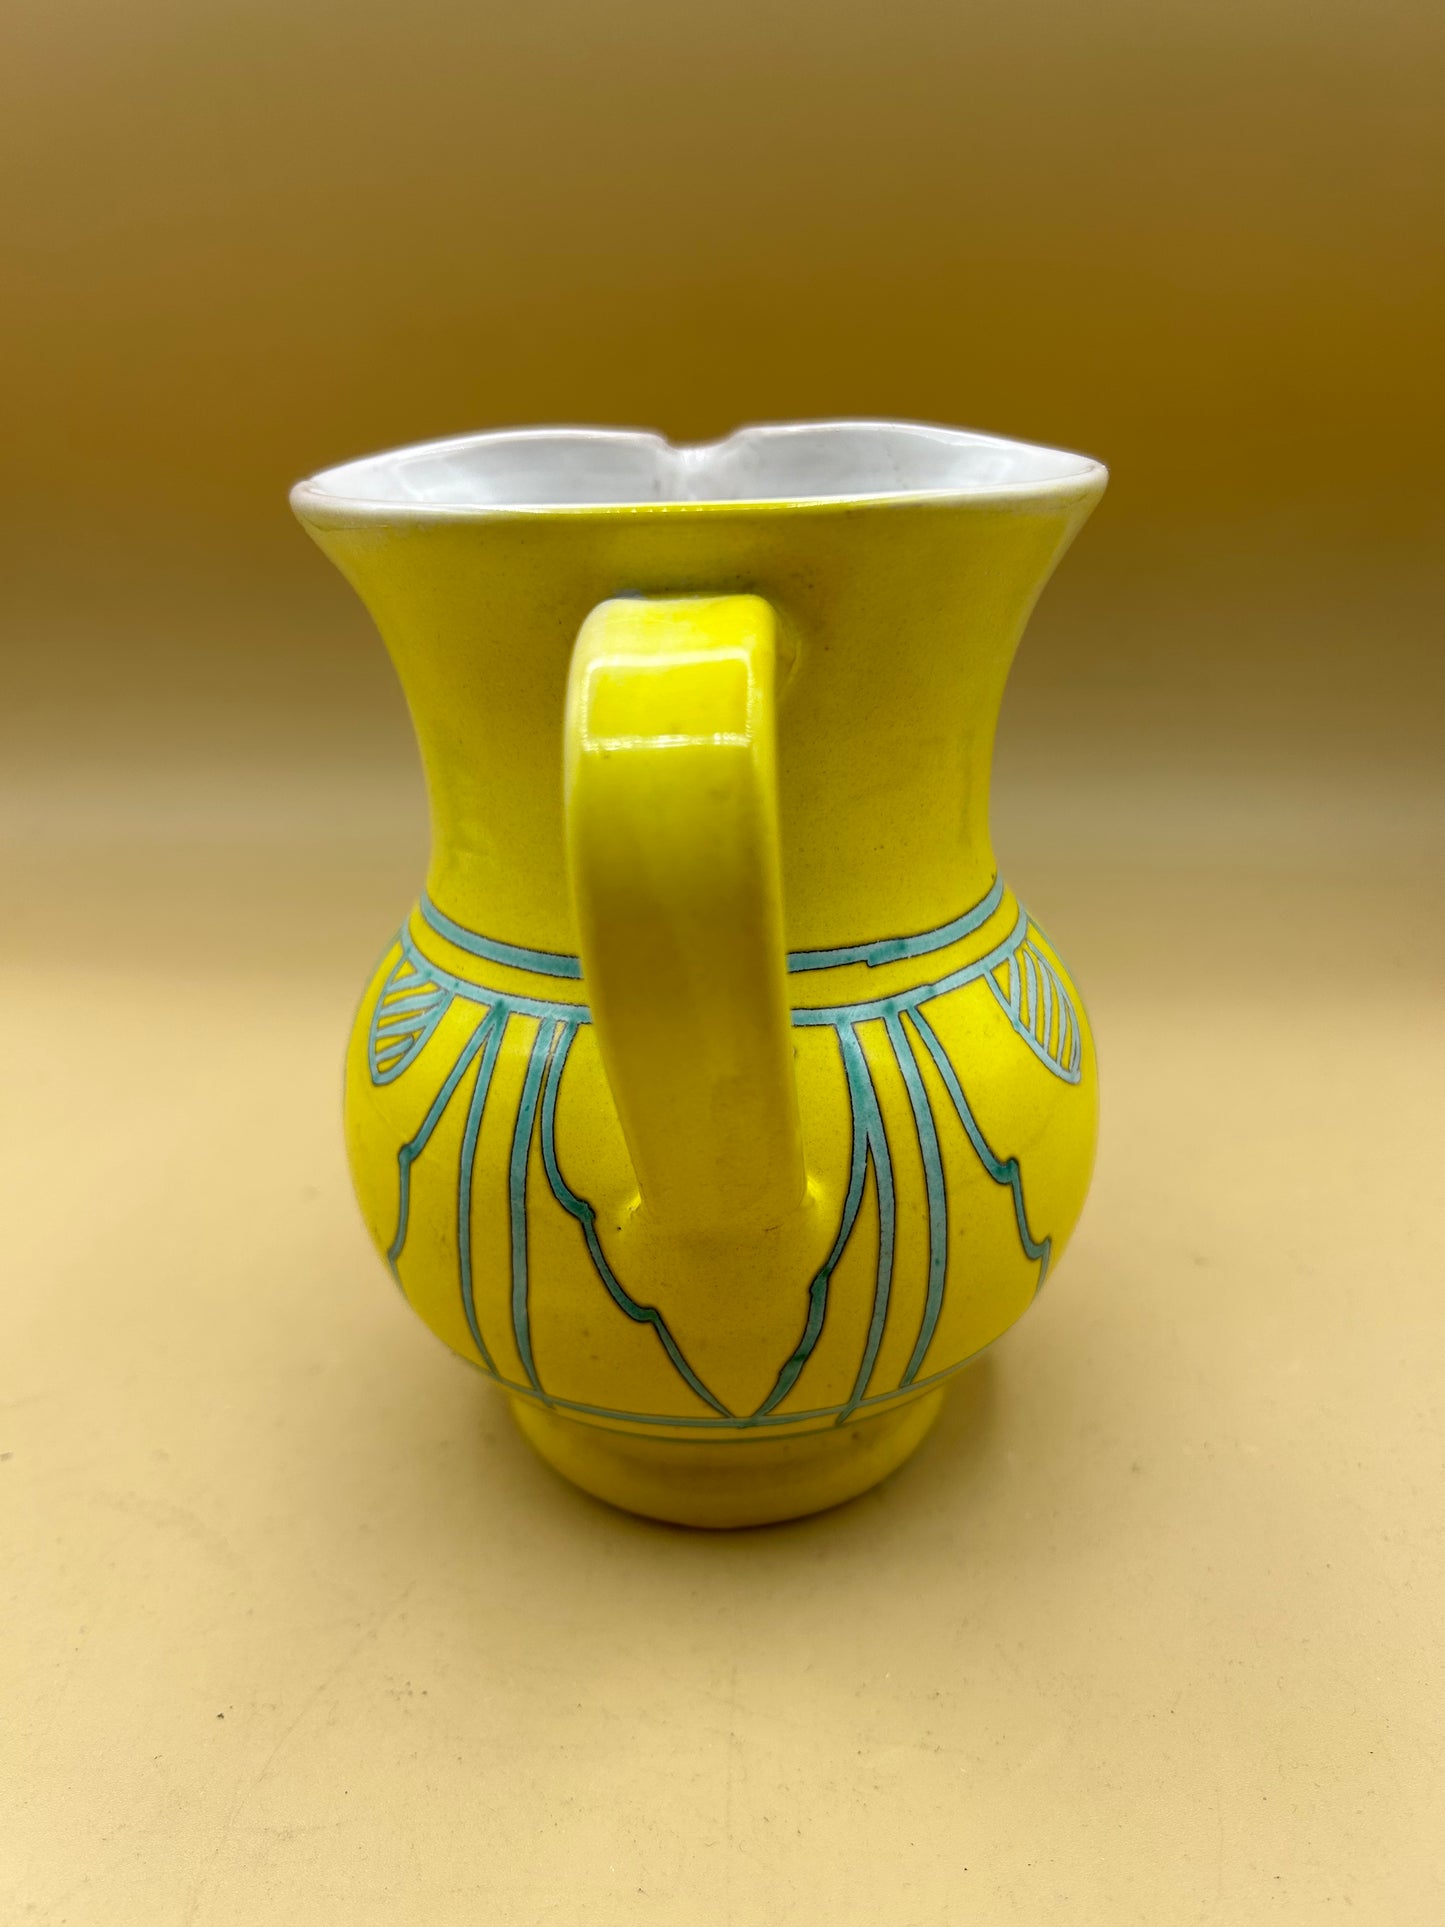 Brocca in ceramica gialla dipinta a mano